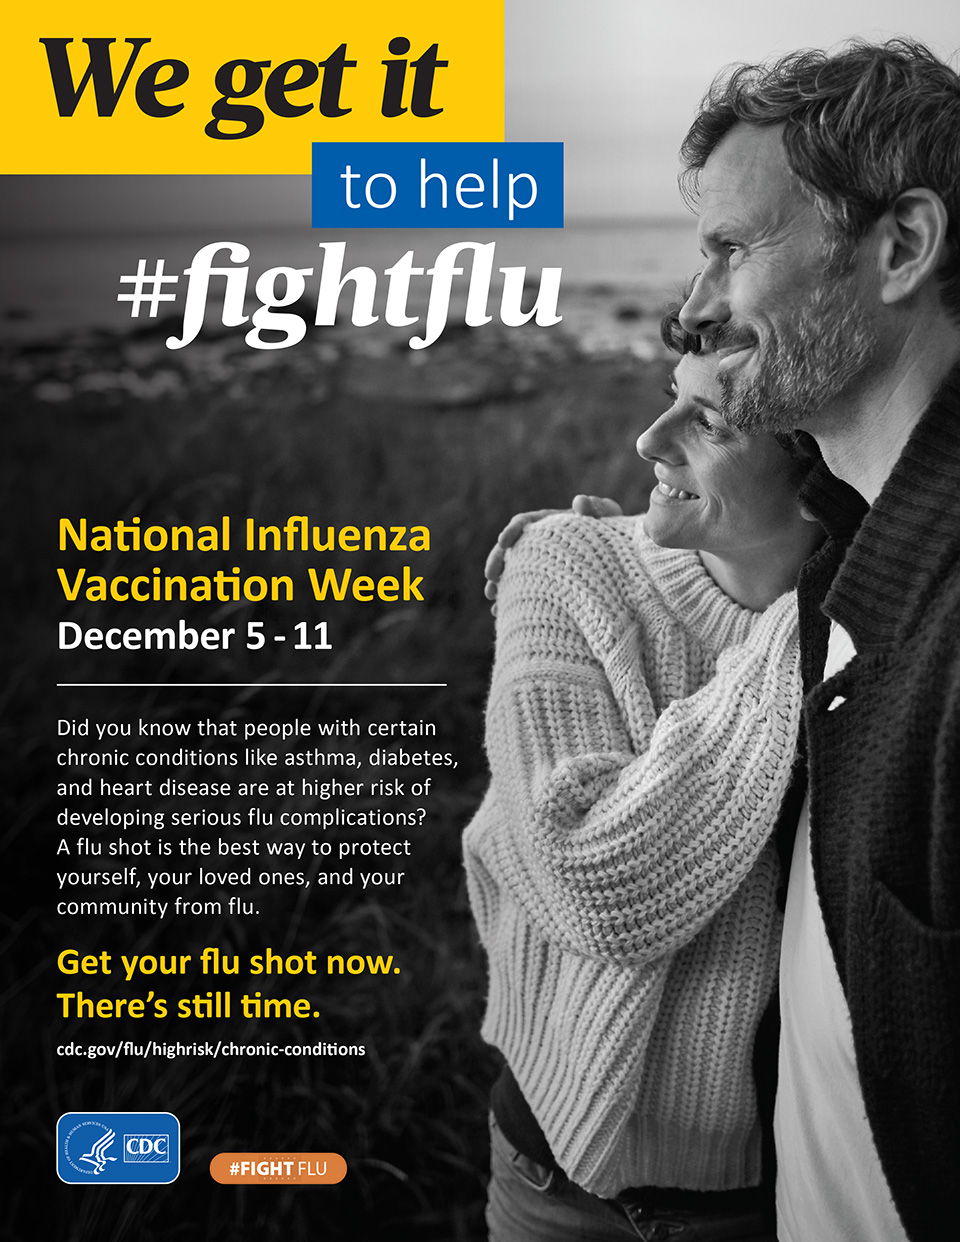 Influenza vaccine info